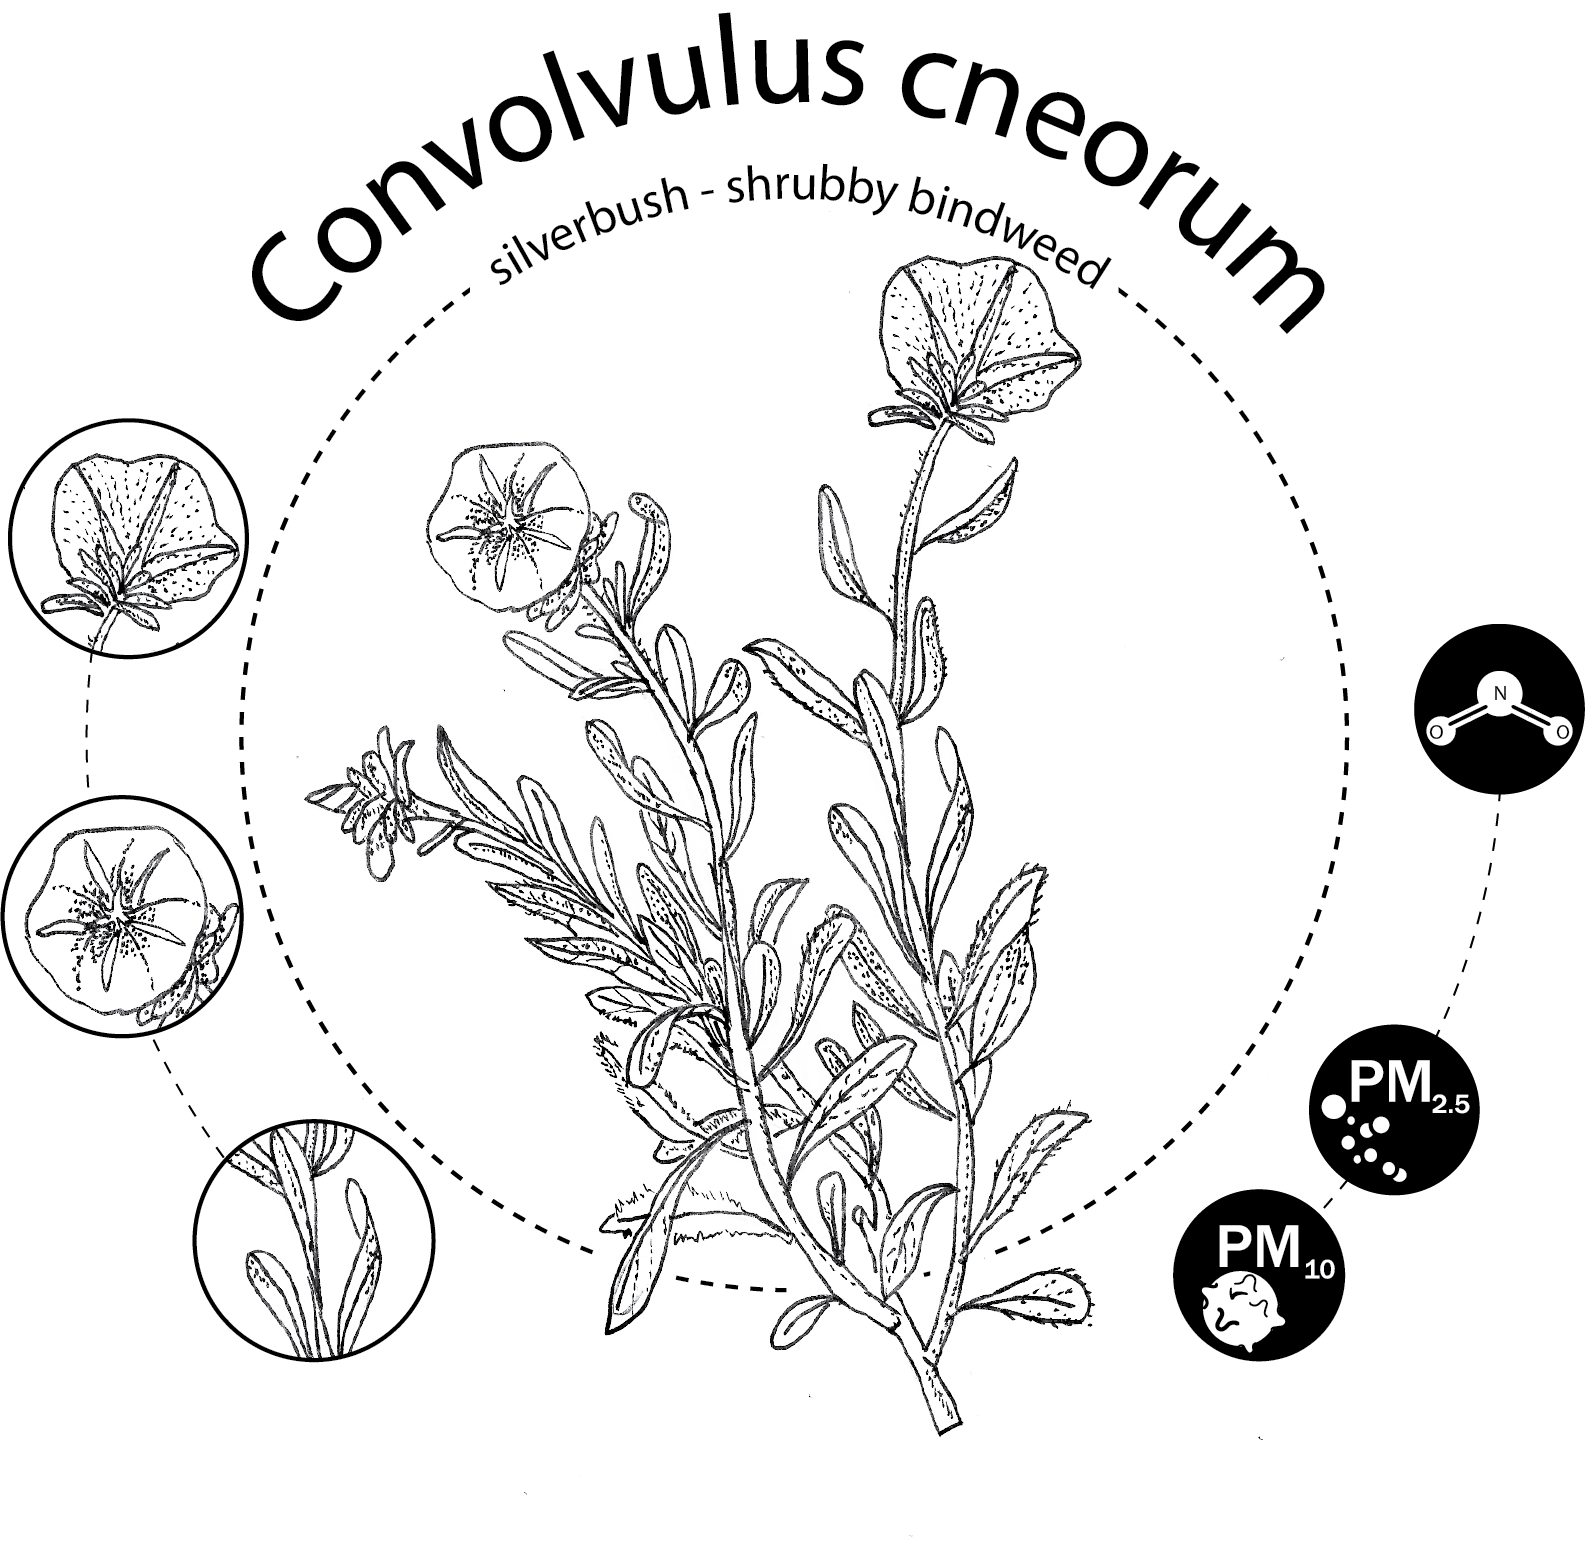 Convolvulus